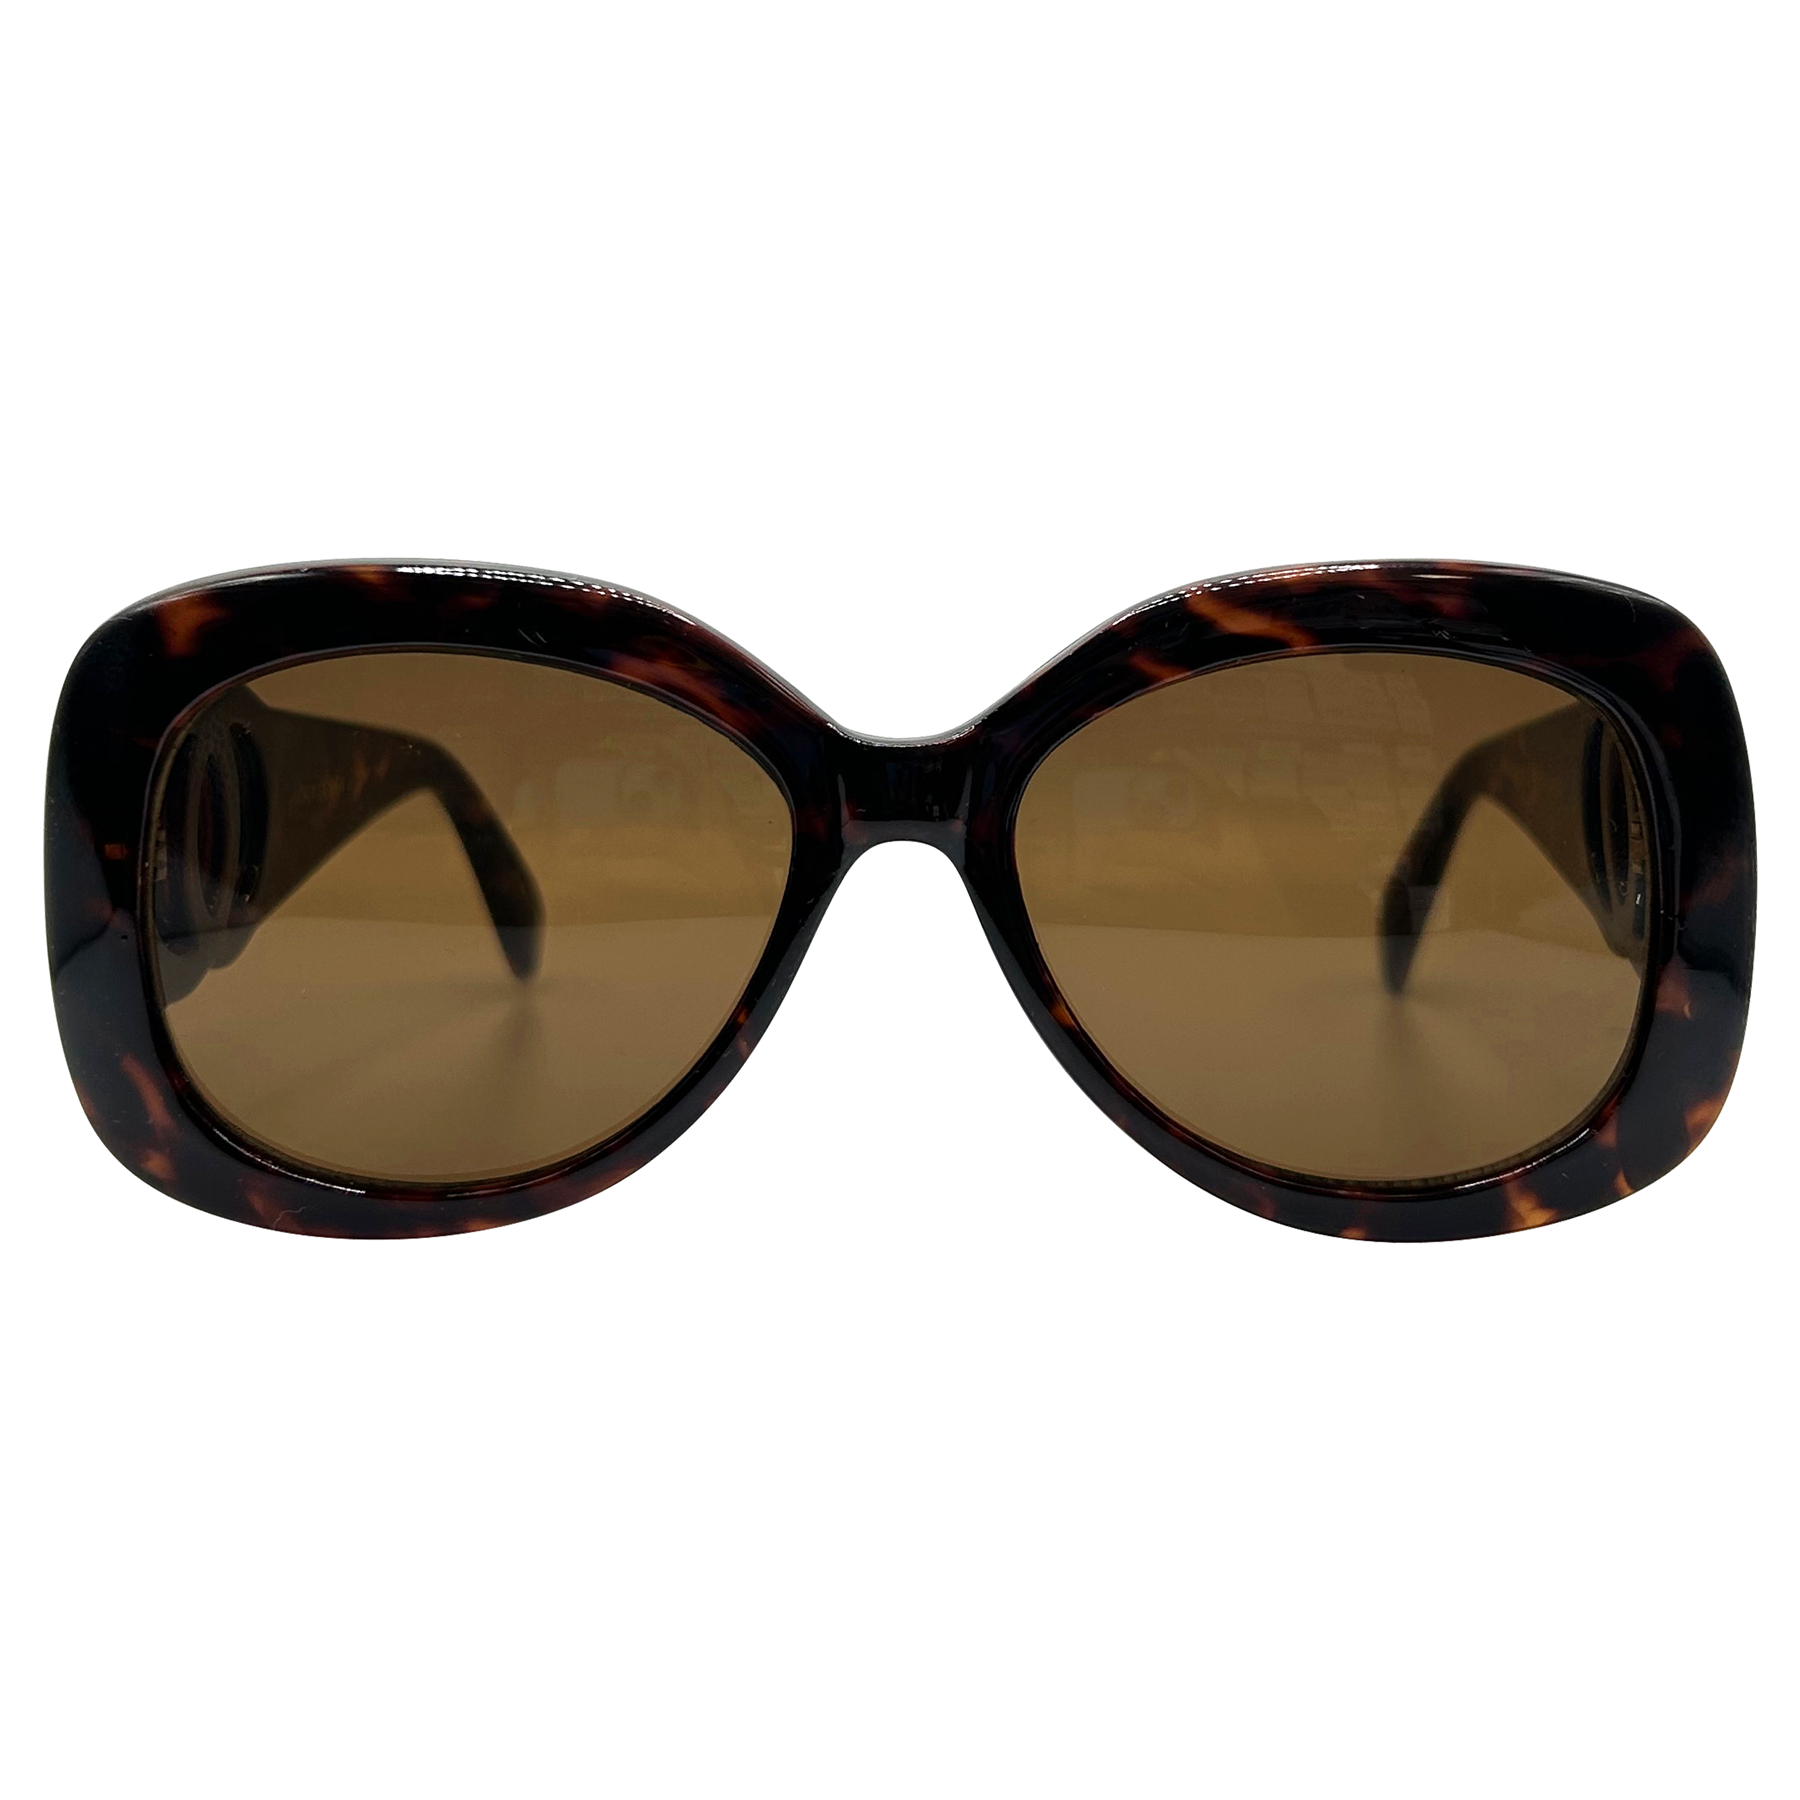 BESITOS Tortoise/Brown Mod 90s Sunglasses